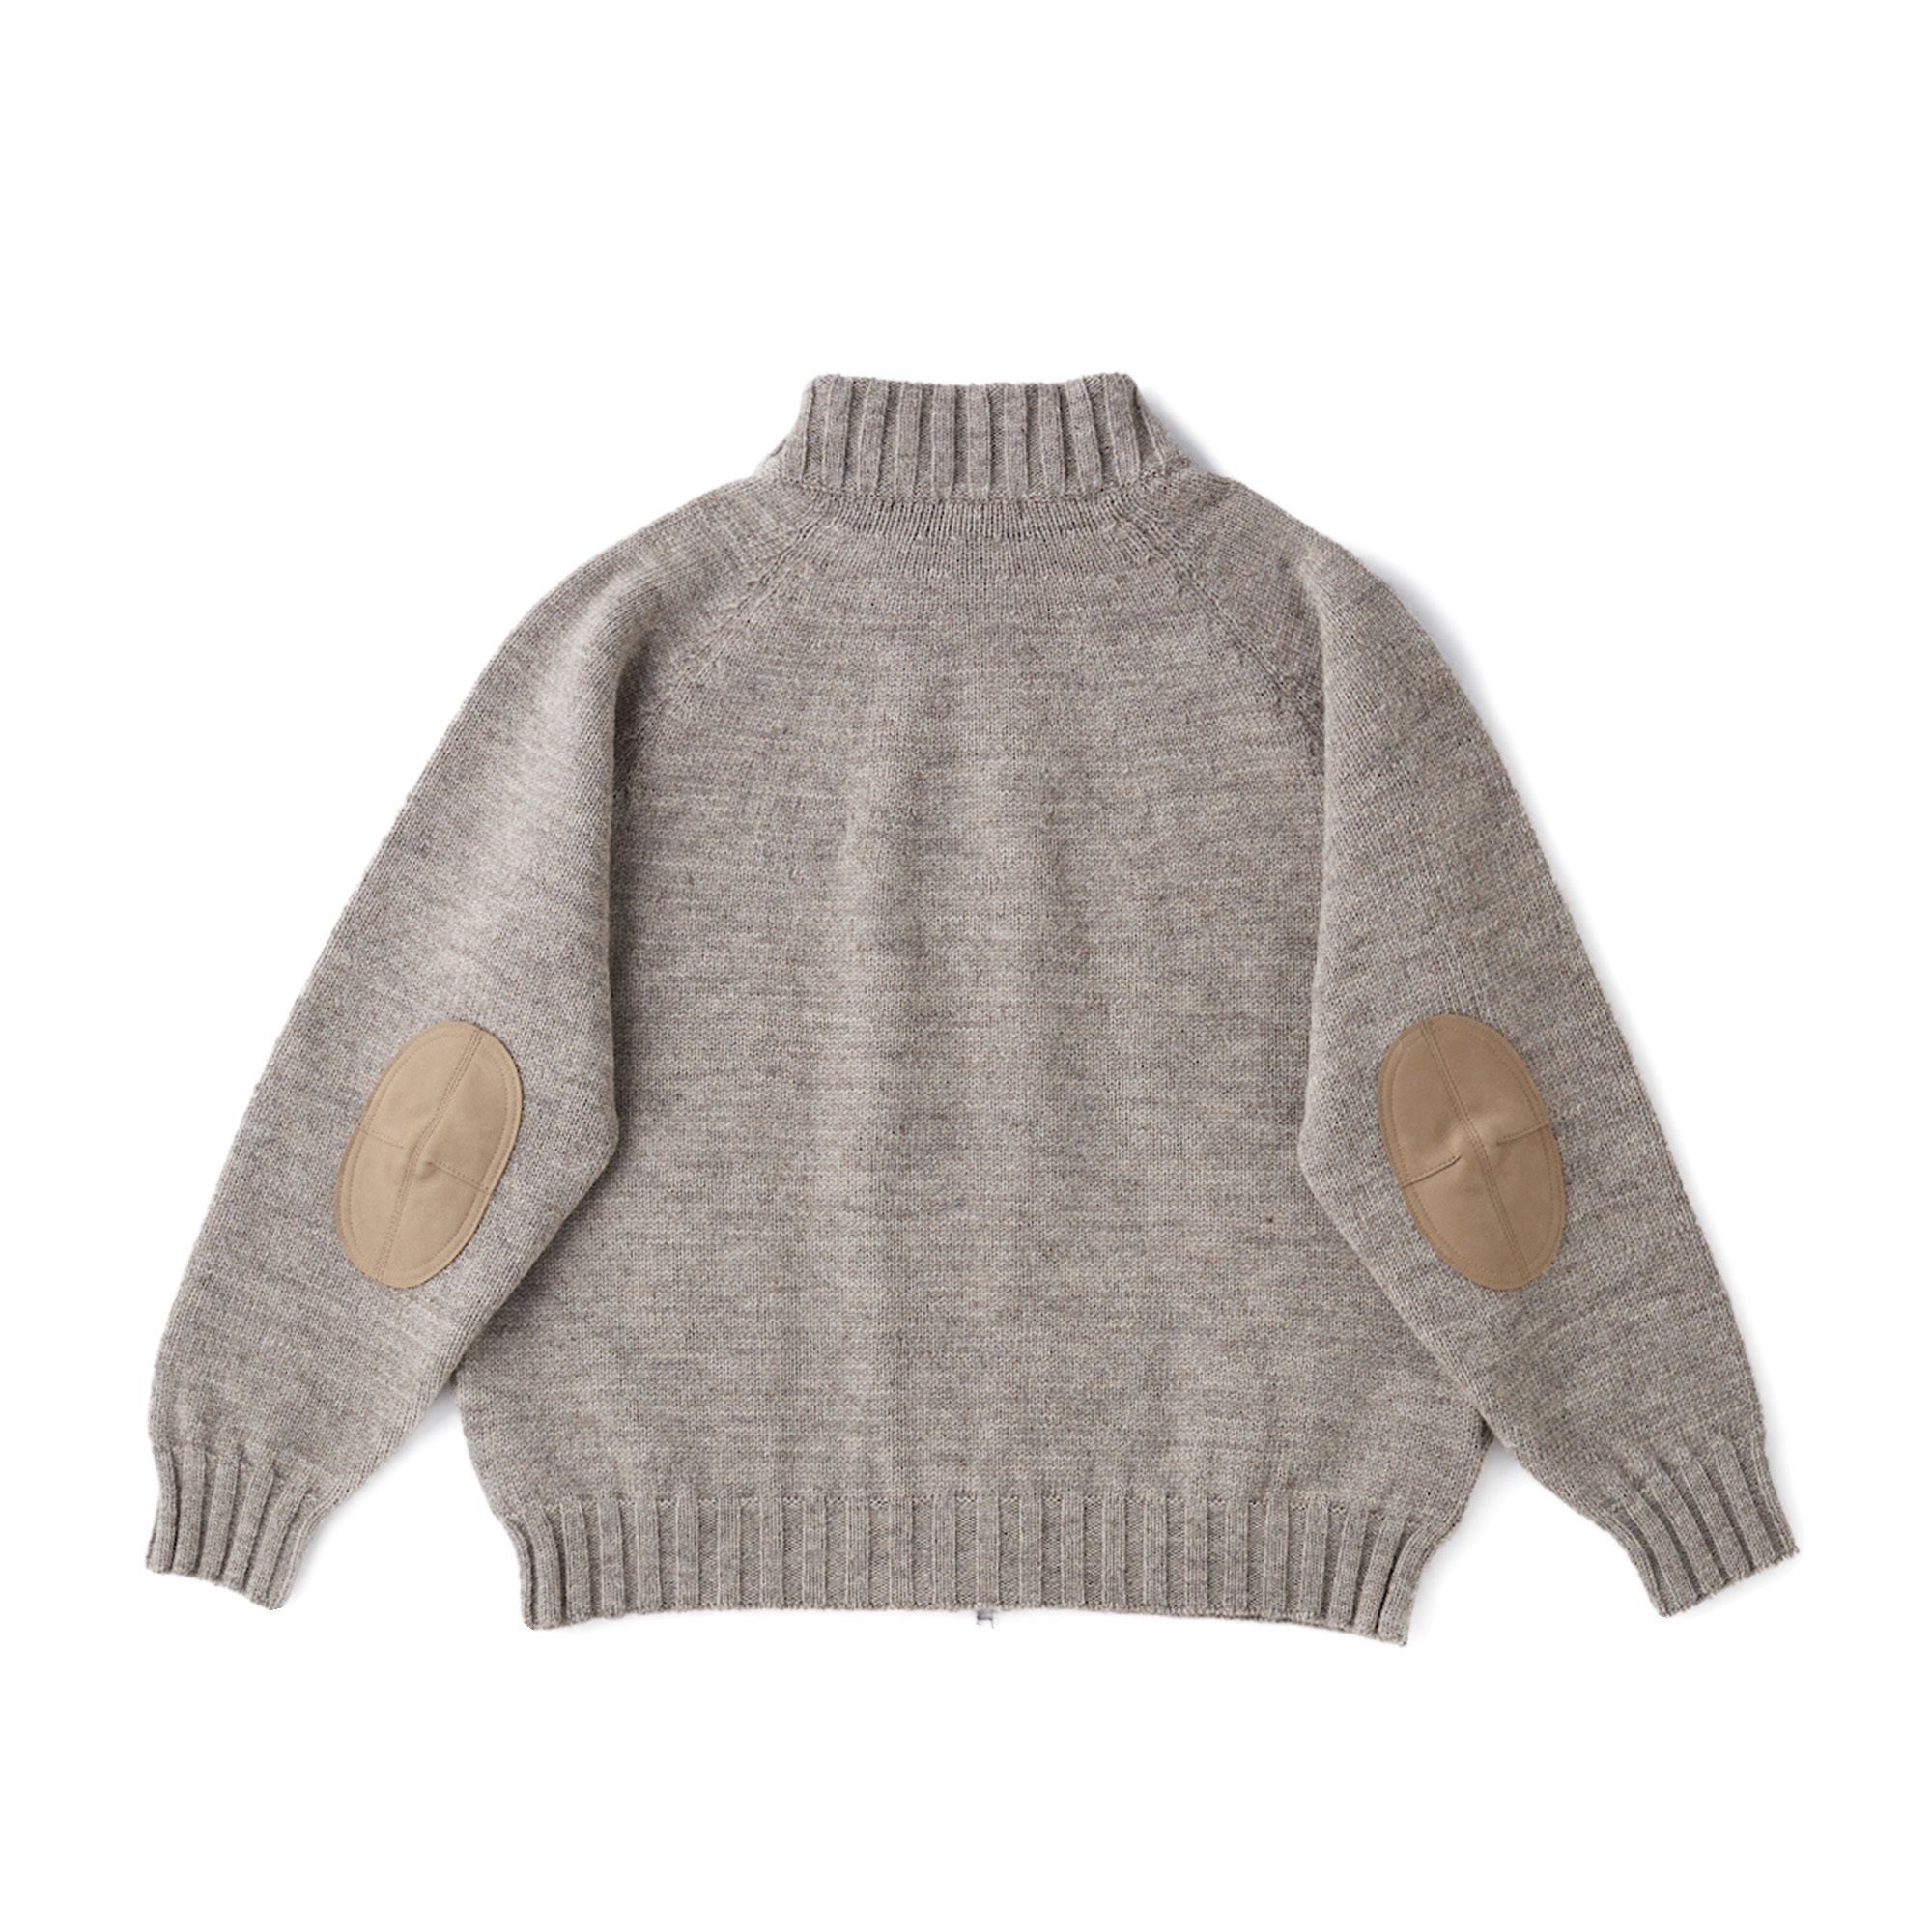 Old Joe Brand - Tweedy Yarn Zip Sweater (Mink)